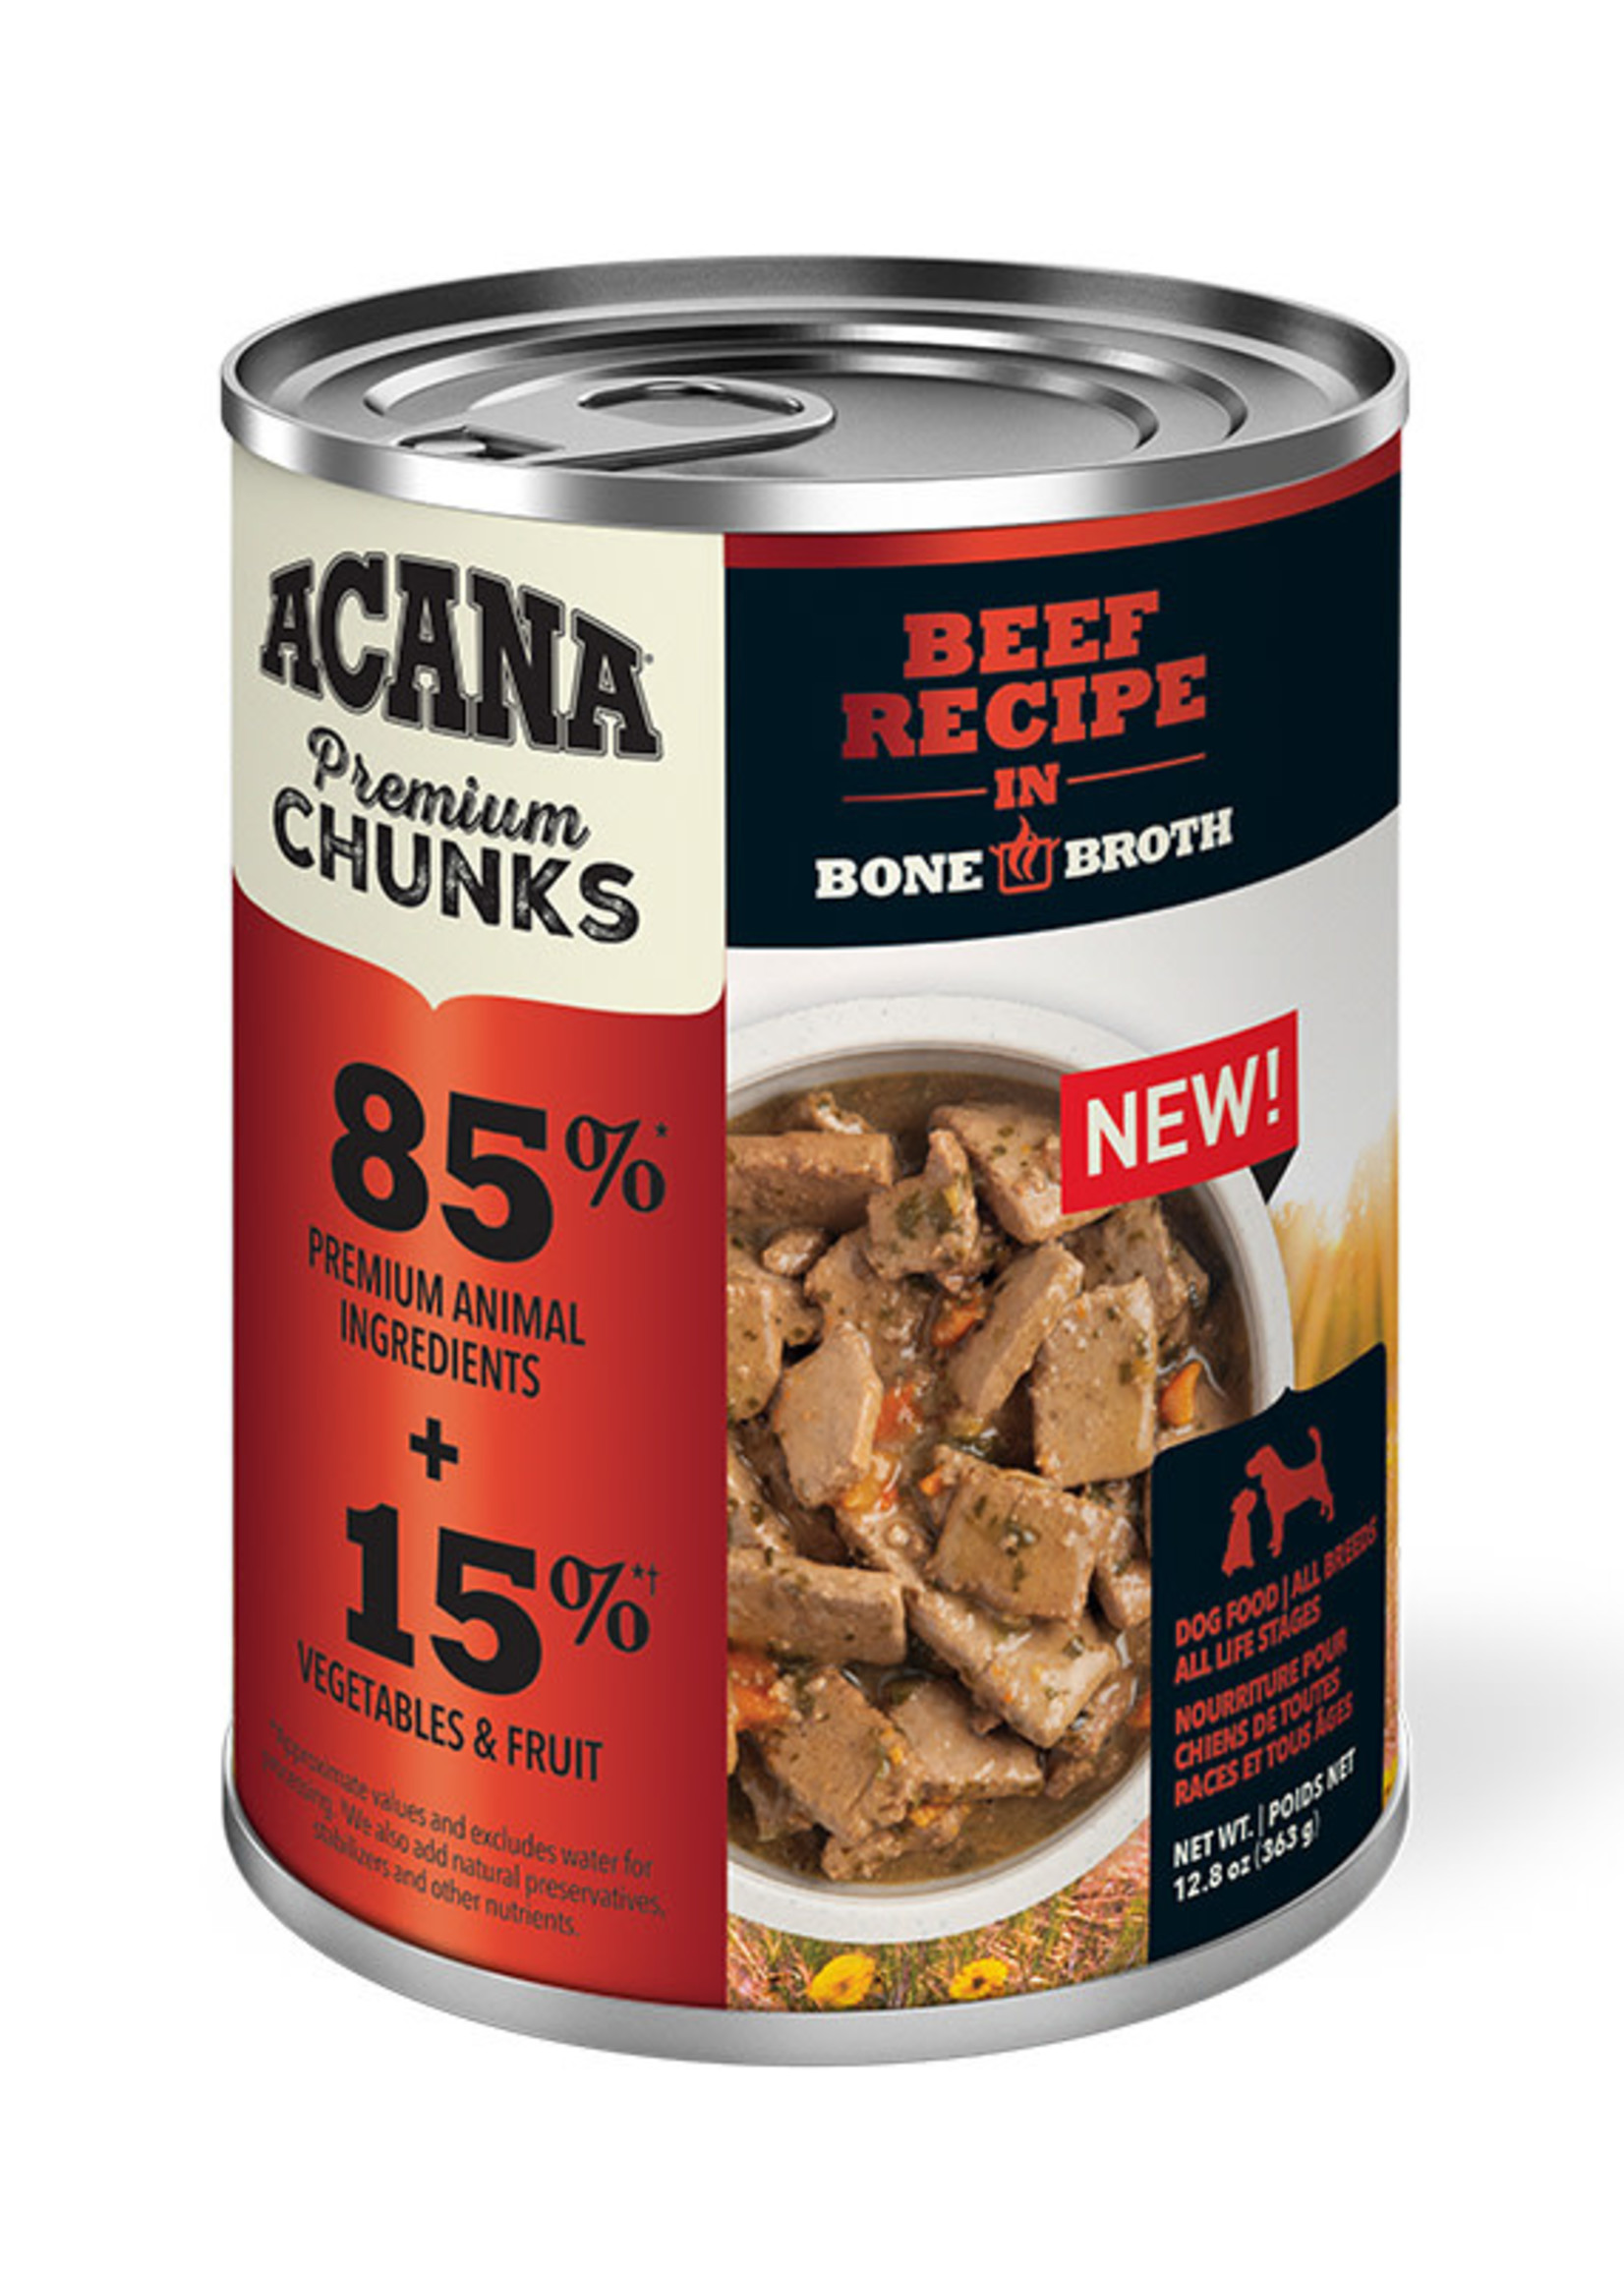 Acana® Acana®  Premium Chunks, Beef Recipe in Bone Broth 12.8oz